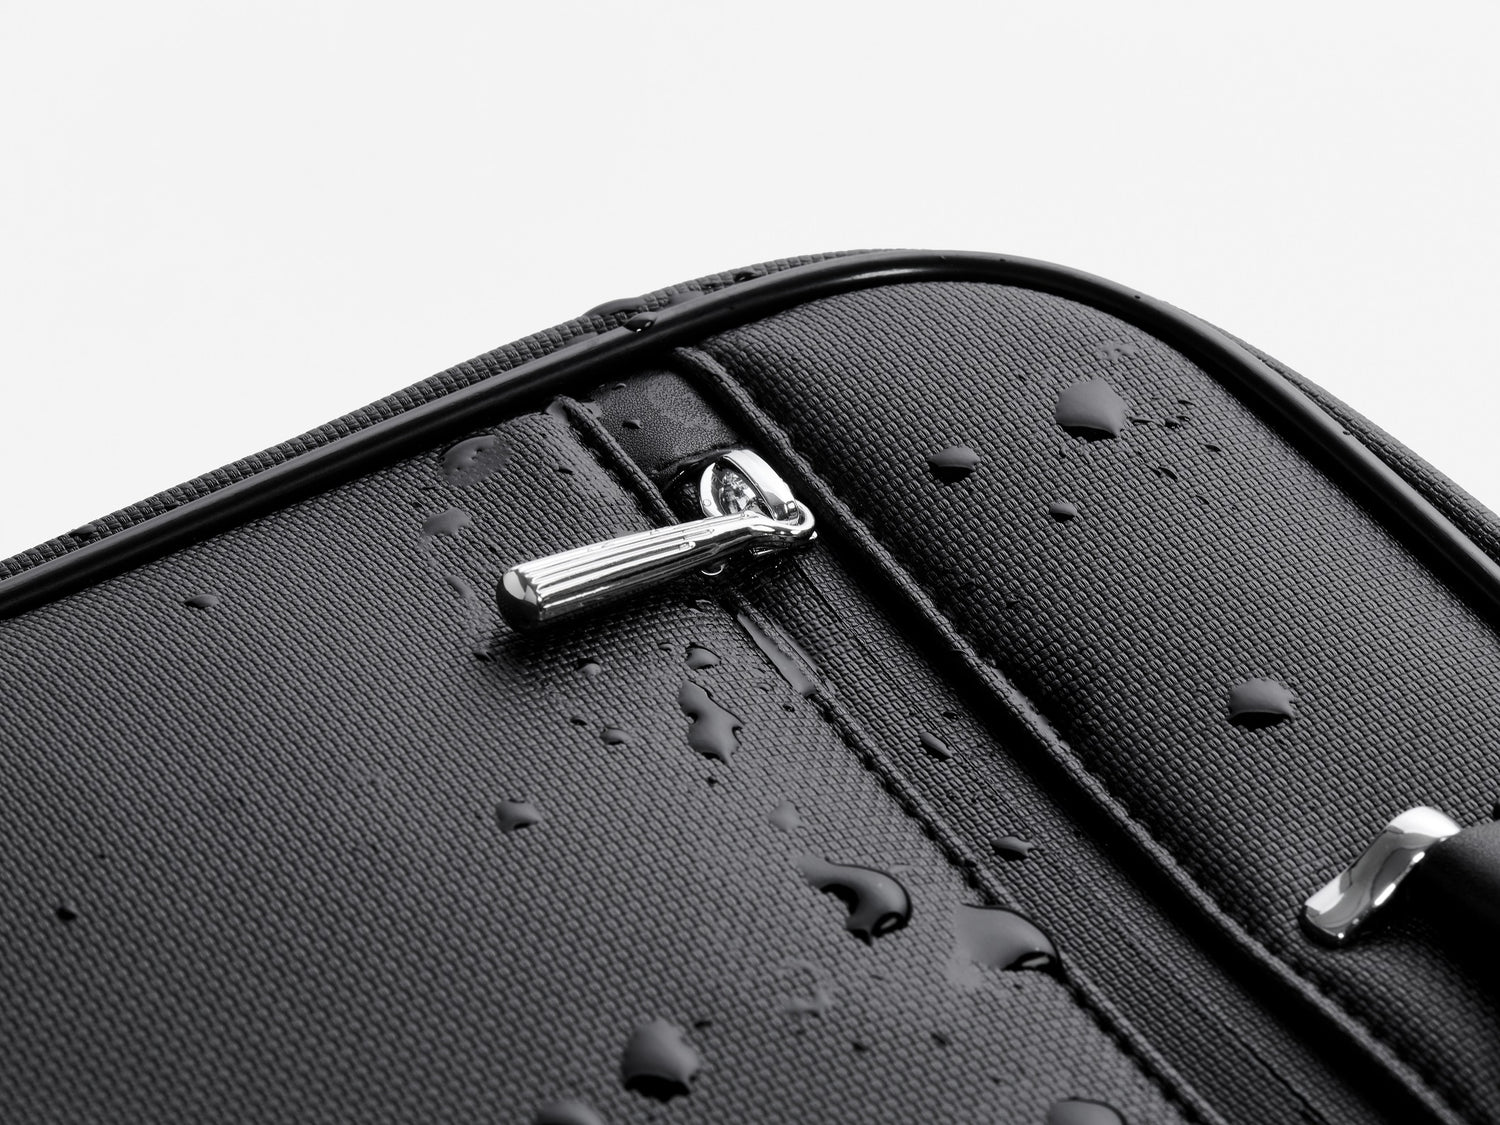 Waterproof Briefcases: Are They Really Waterproof or Water Resistant?